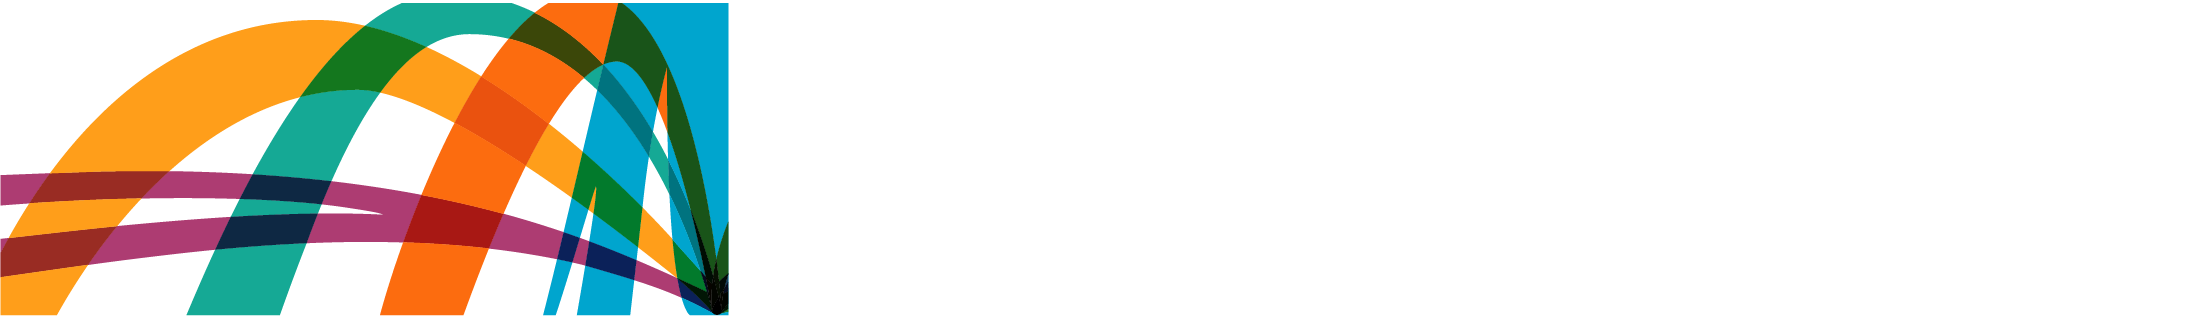 Euronmonitor international logo